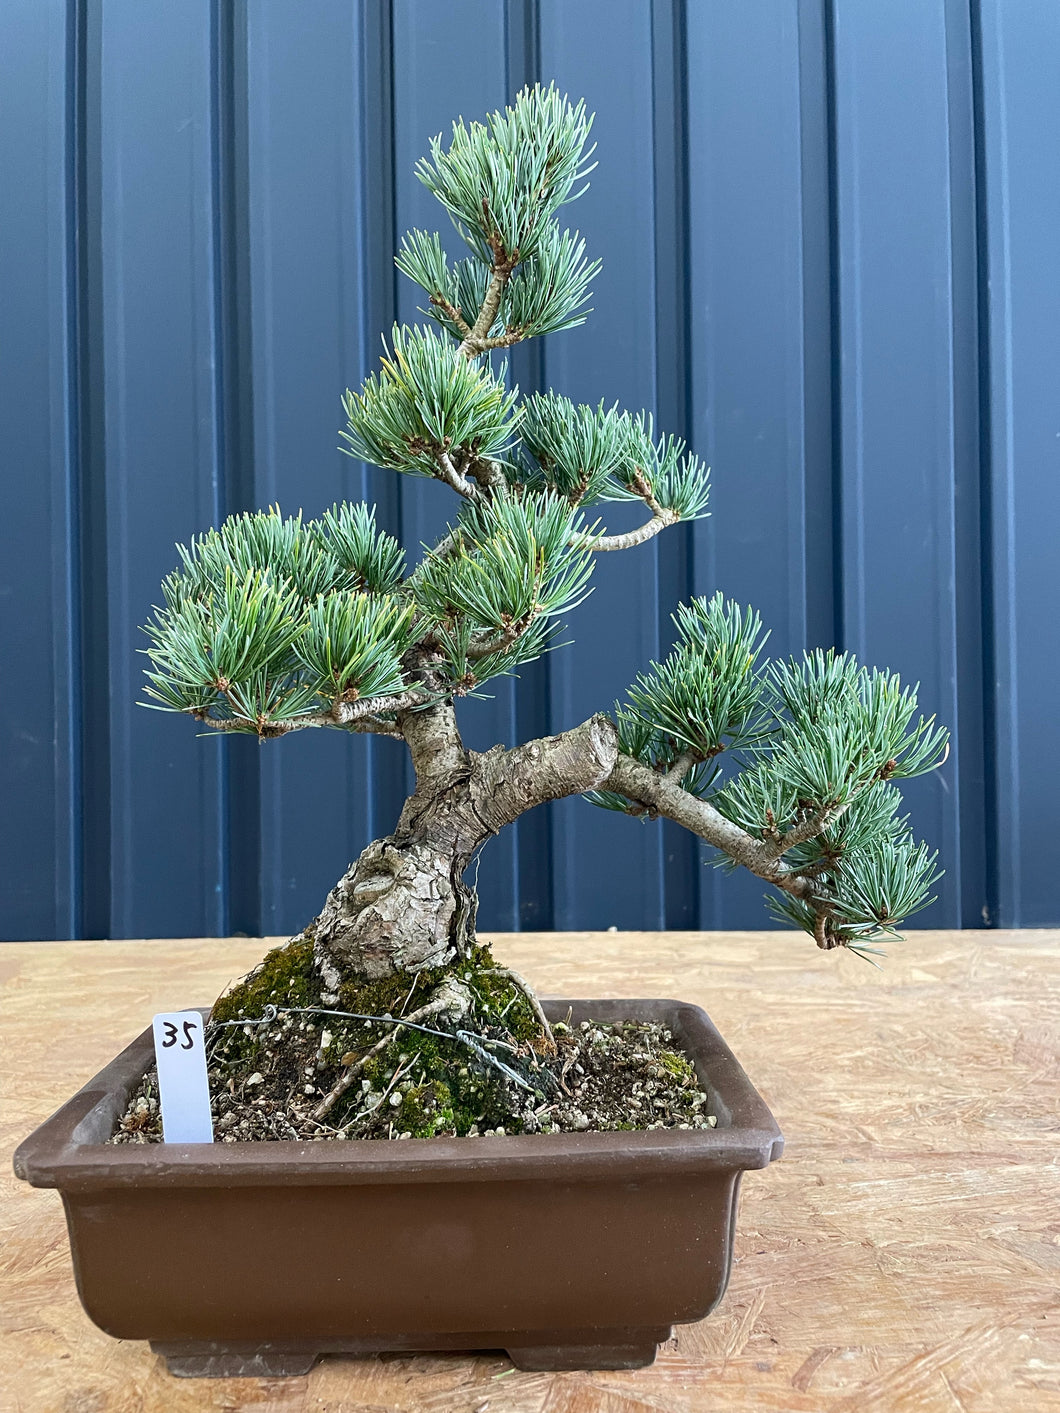 預訂日本🇯🇵五葉松 Japanese white pine